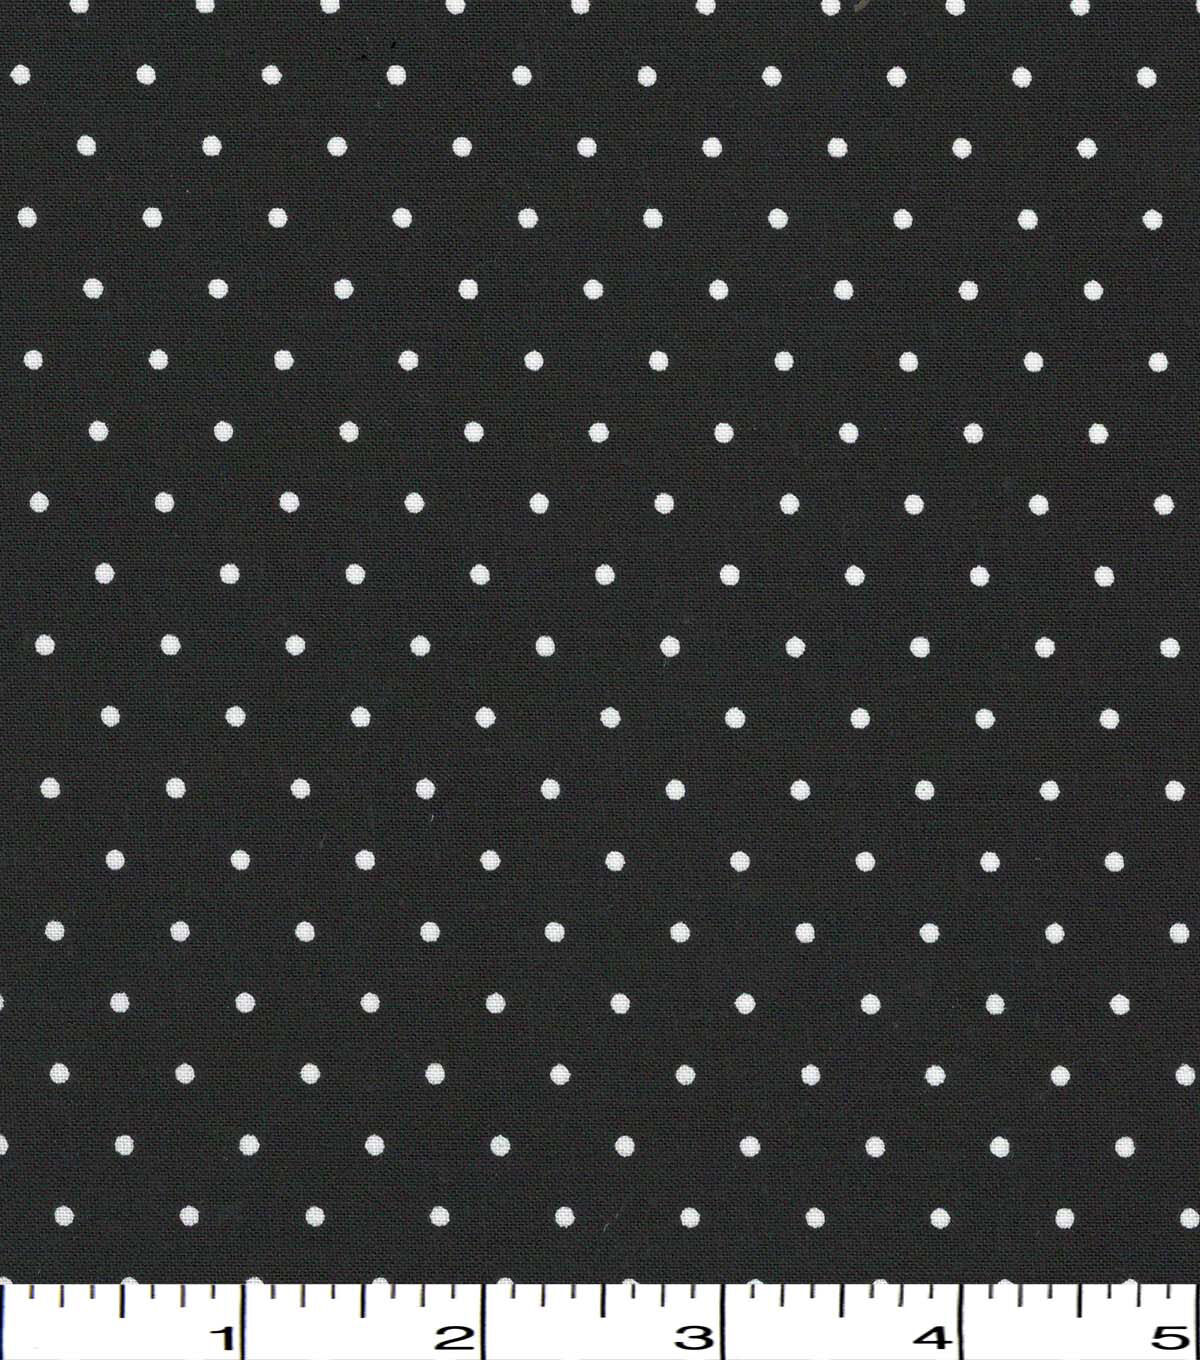 Joann Fabrics brown dots woven quilting cotton Green Polka dot fabric Blue BTY